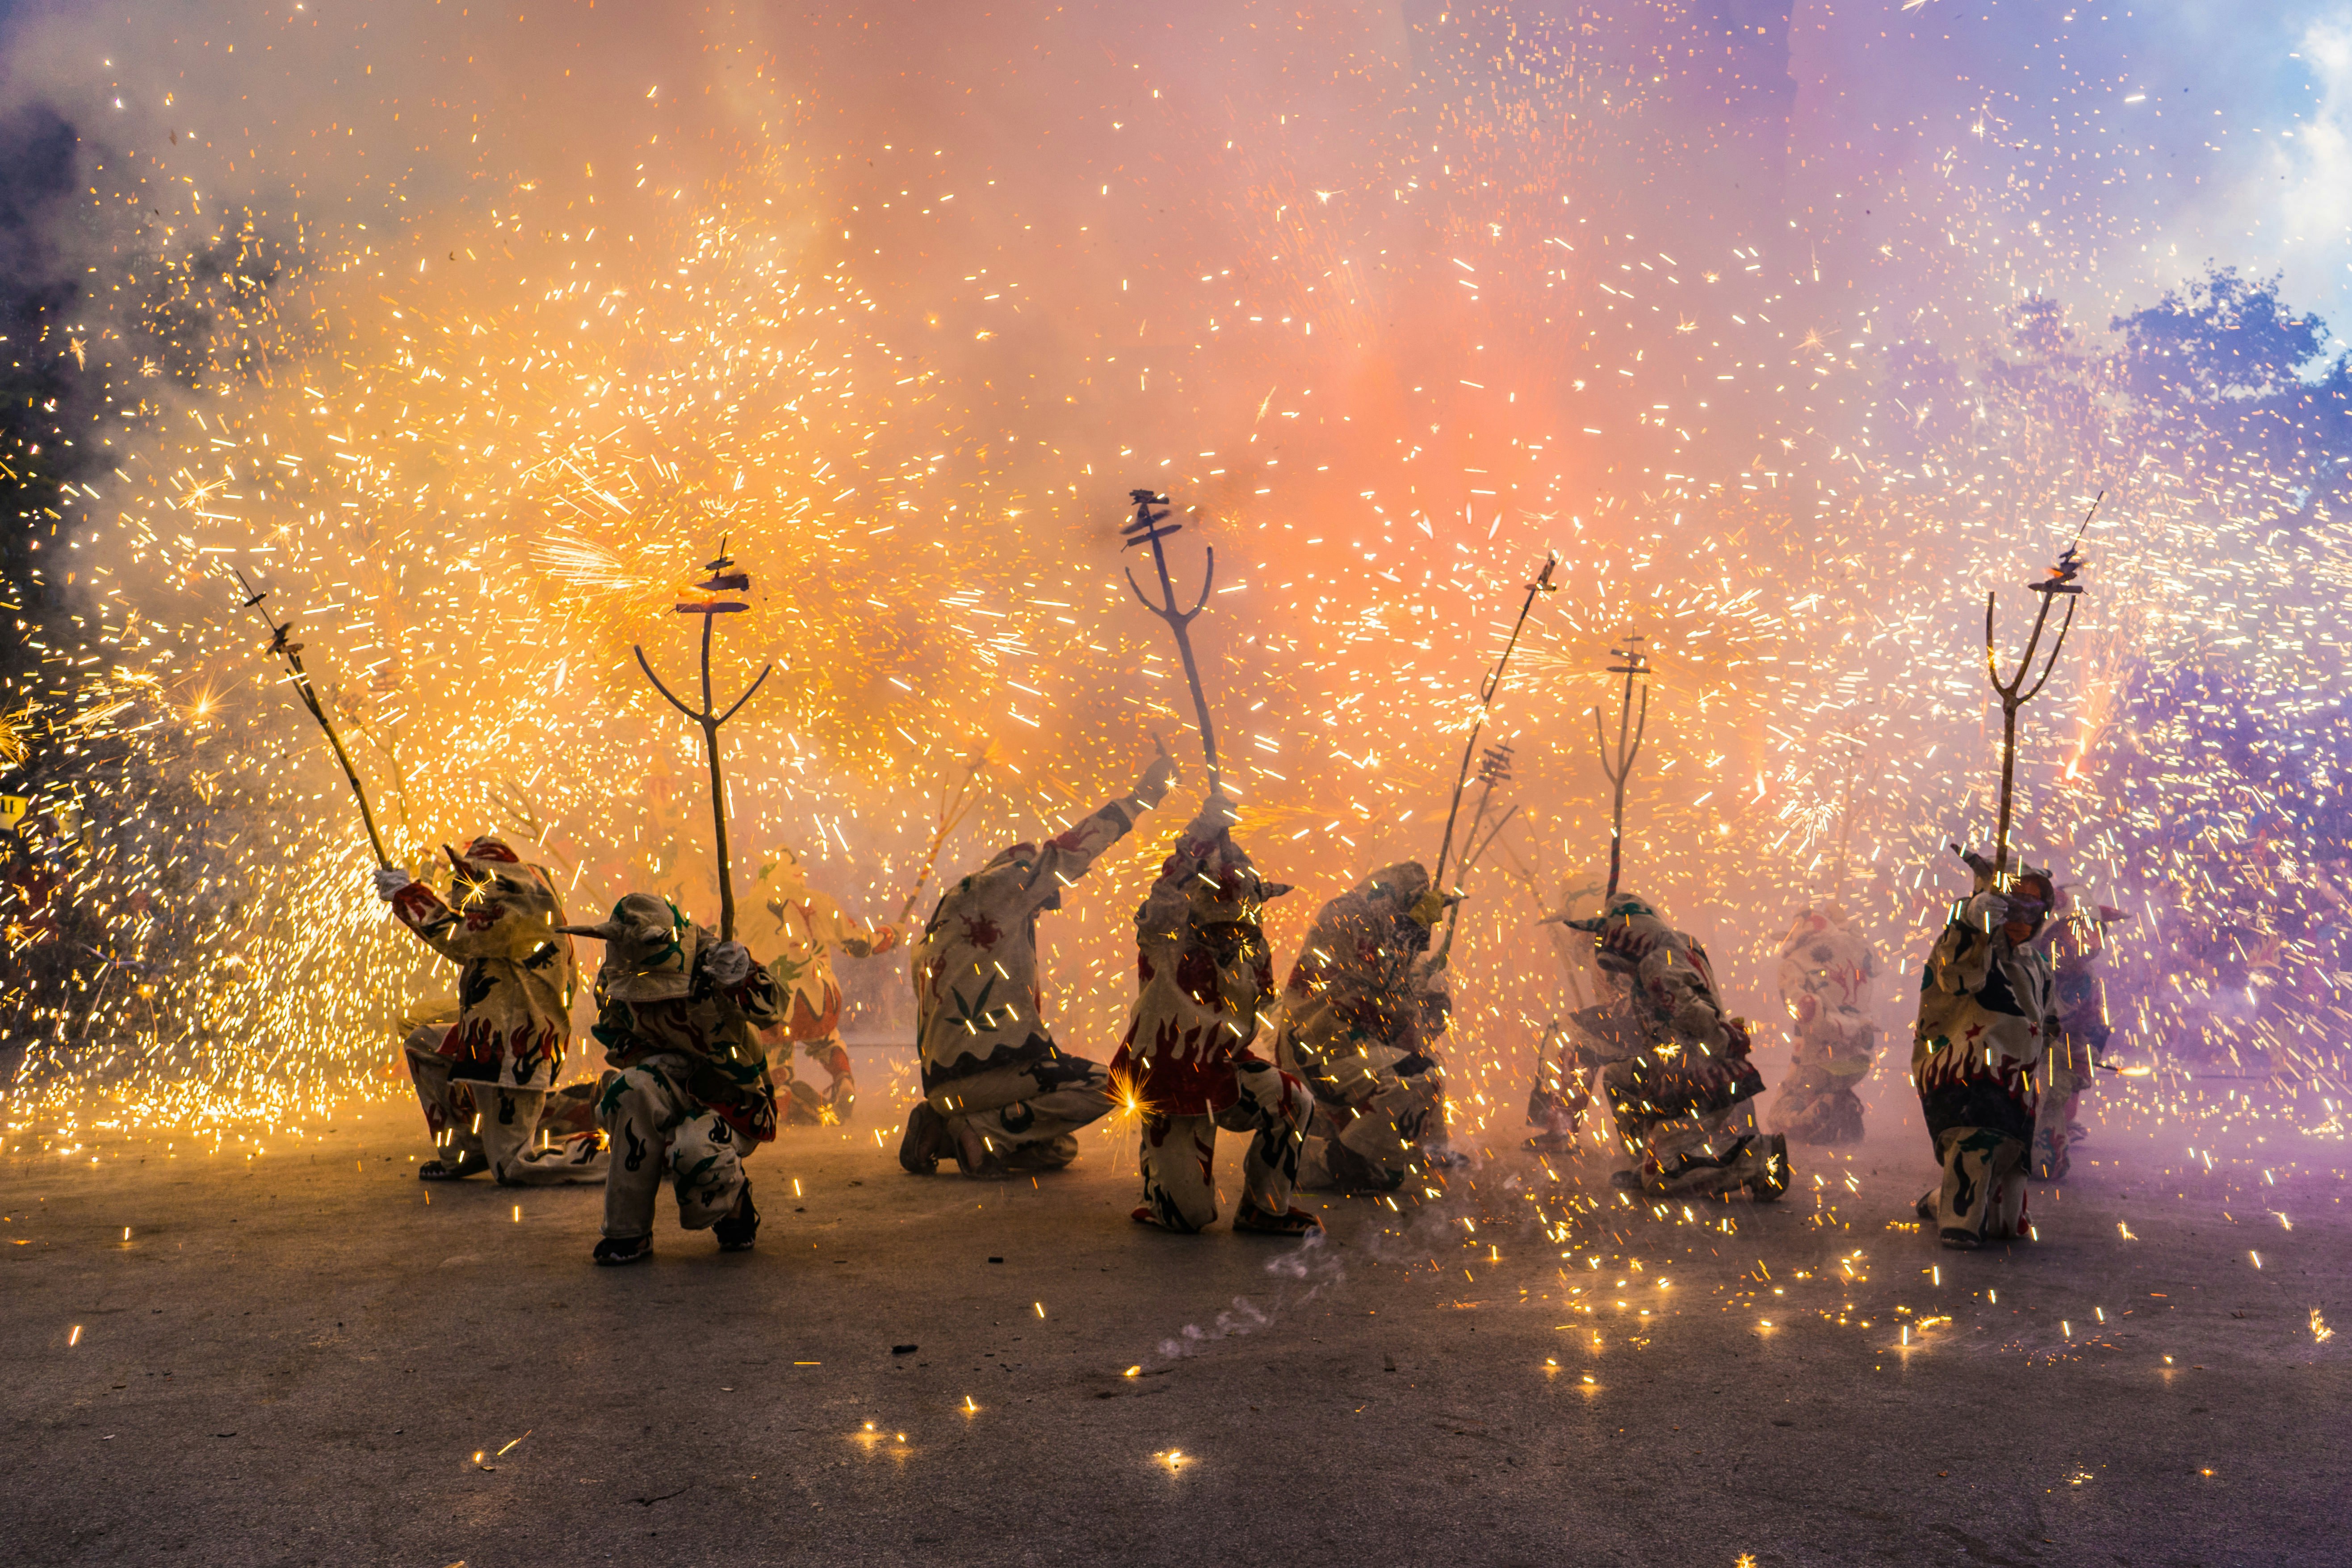 People dressed as devils kneel on the floor brandishing pitchforks while fireworks erupt around them.